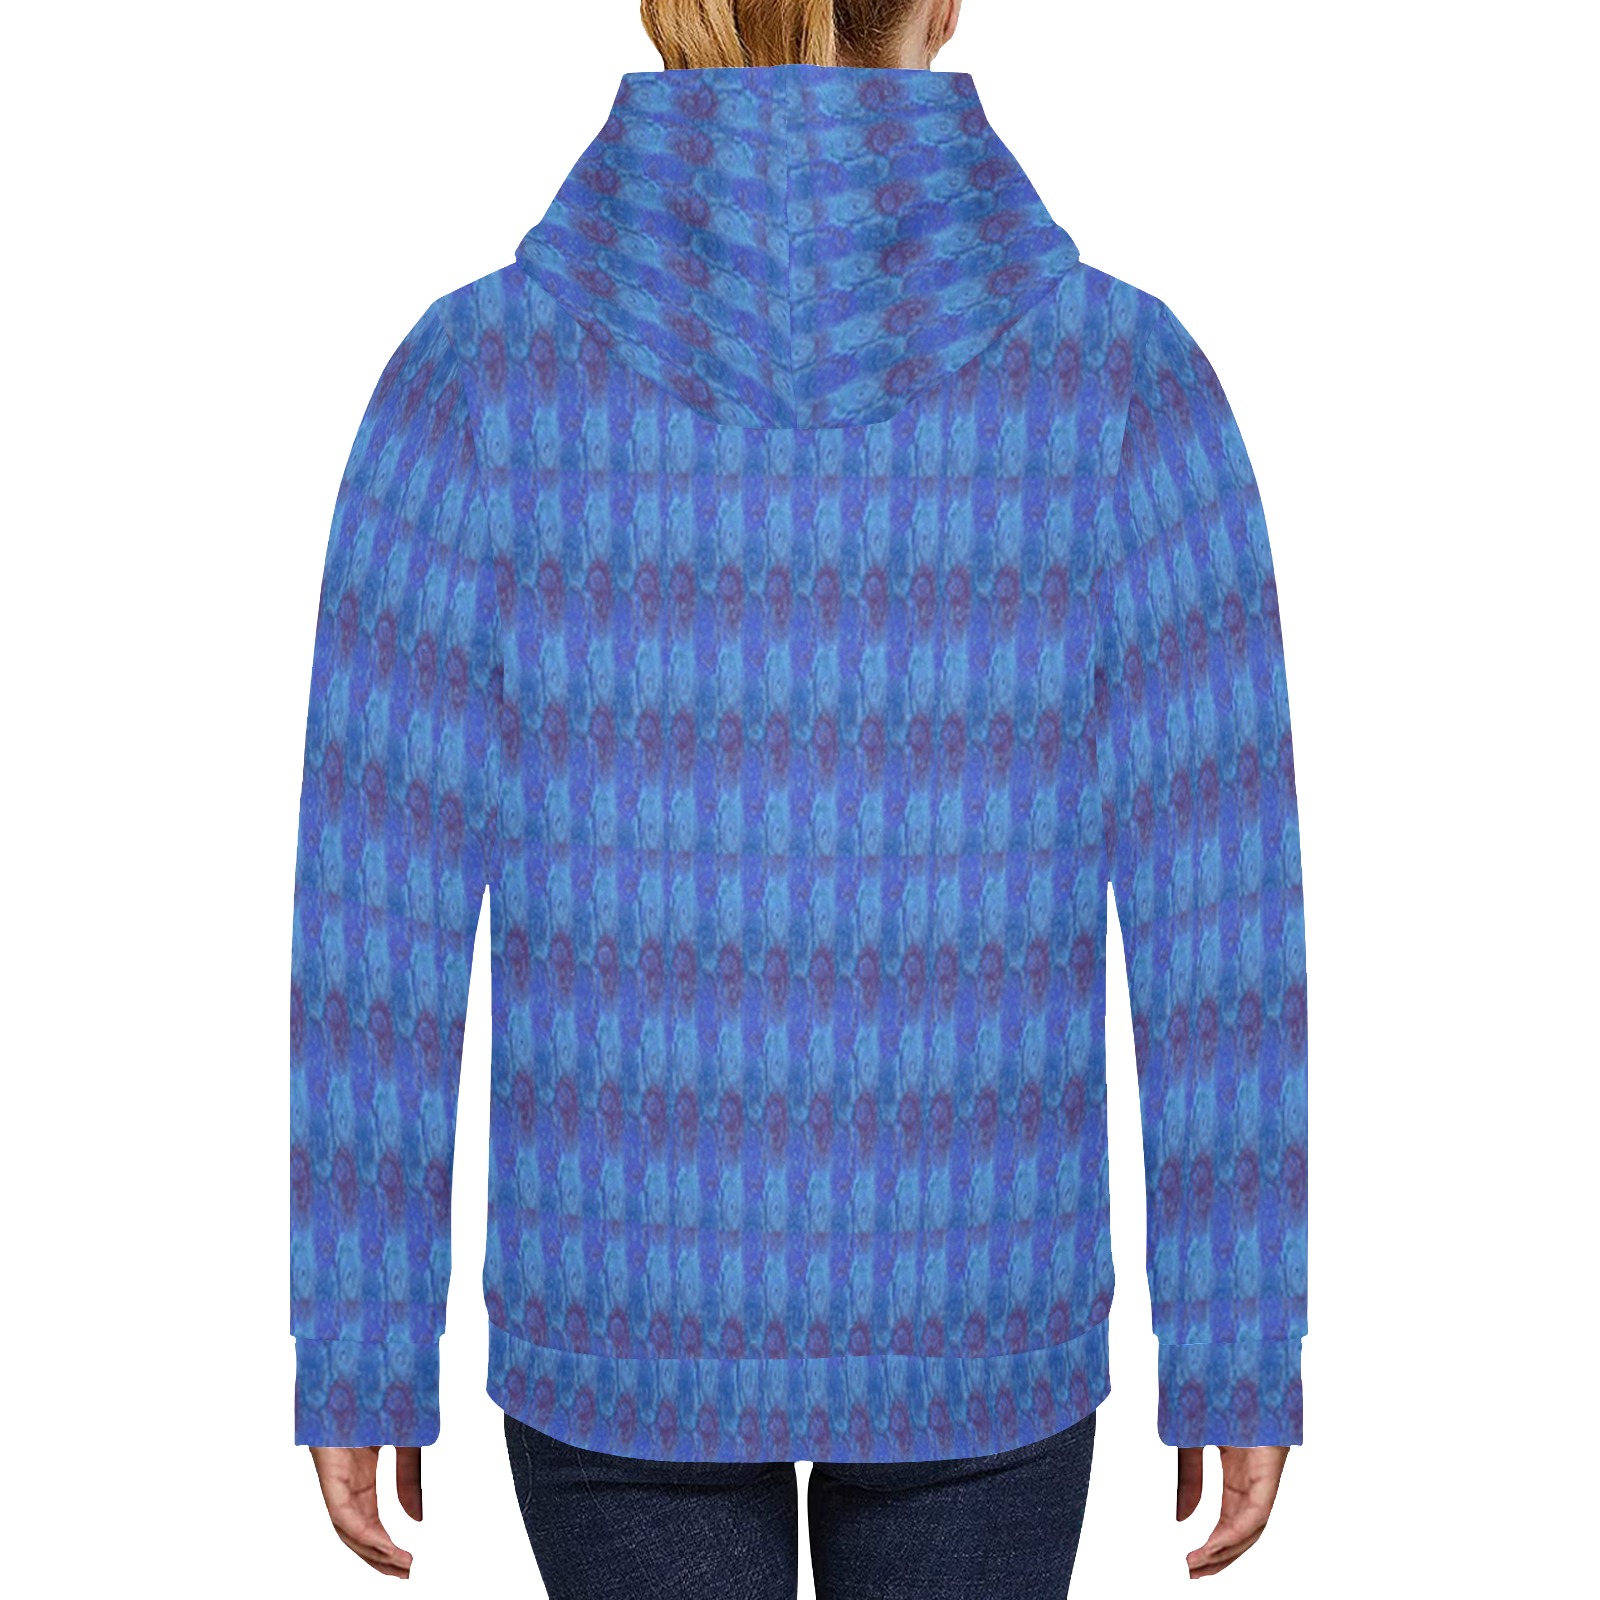 colorful Women's Long Sleeve Fleece Hoodie (Model H55)